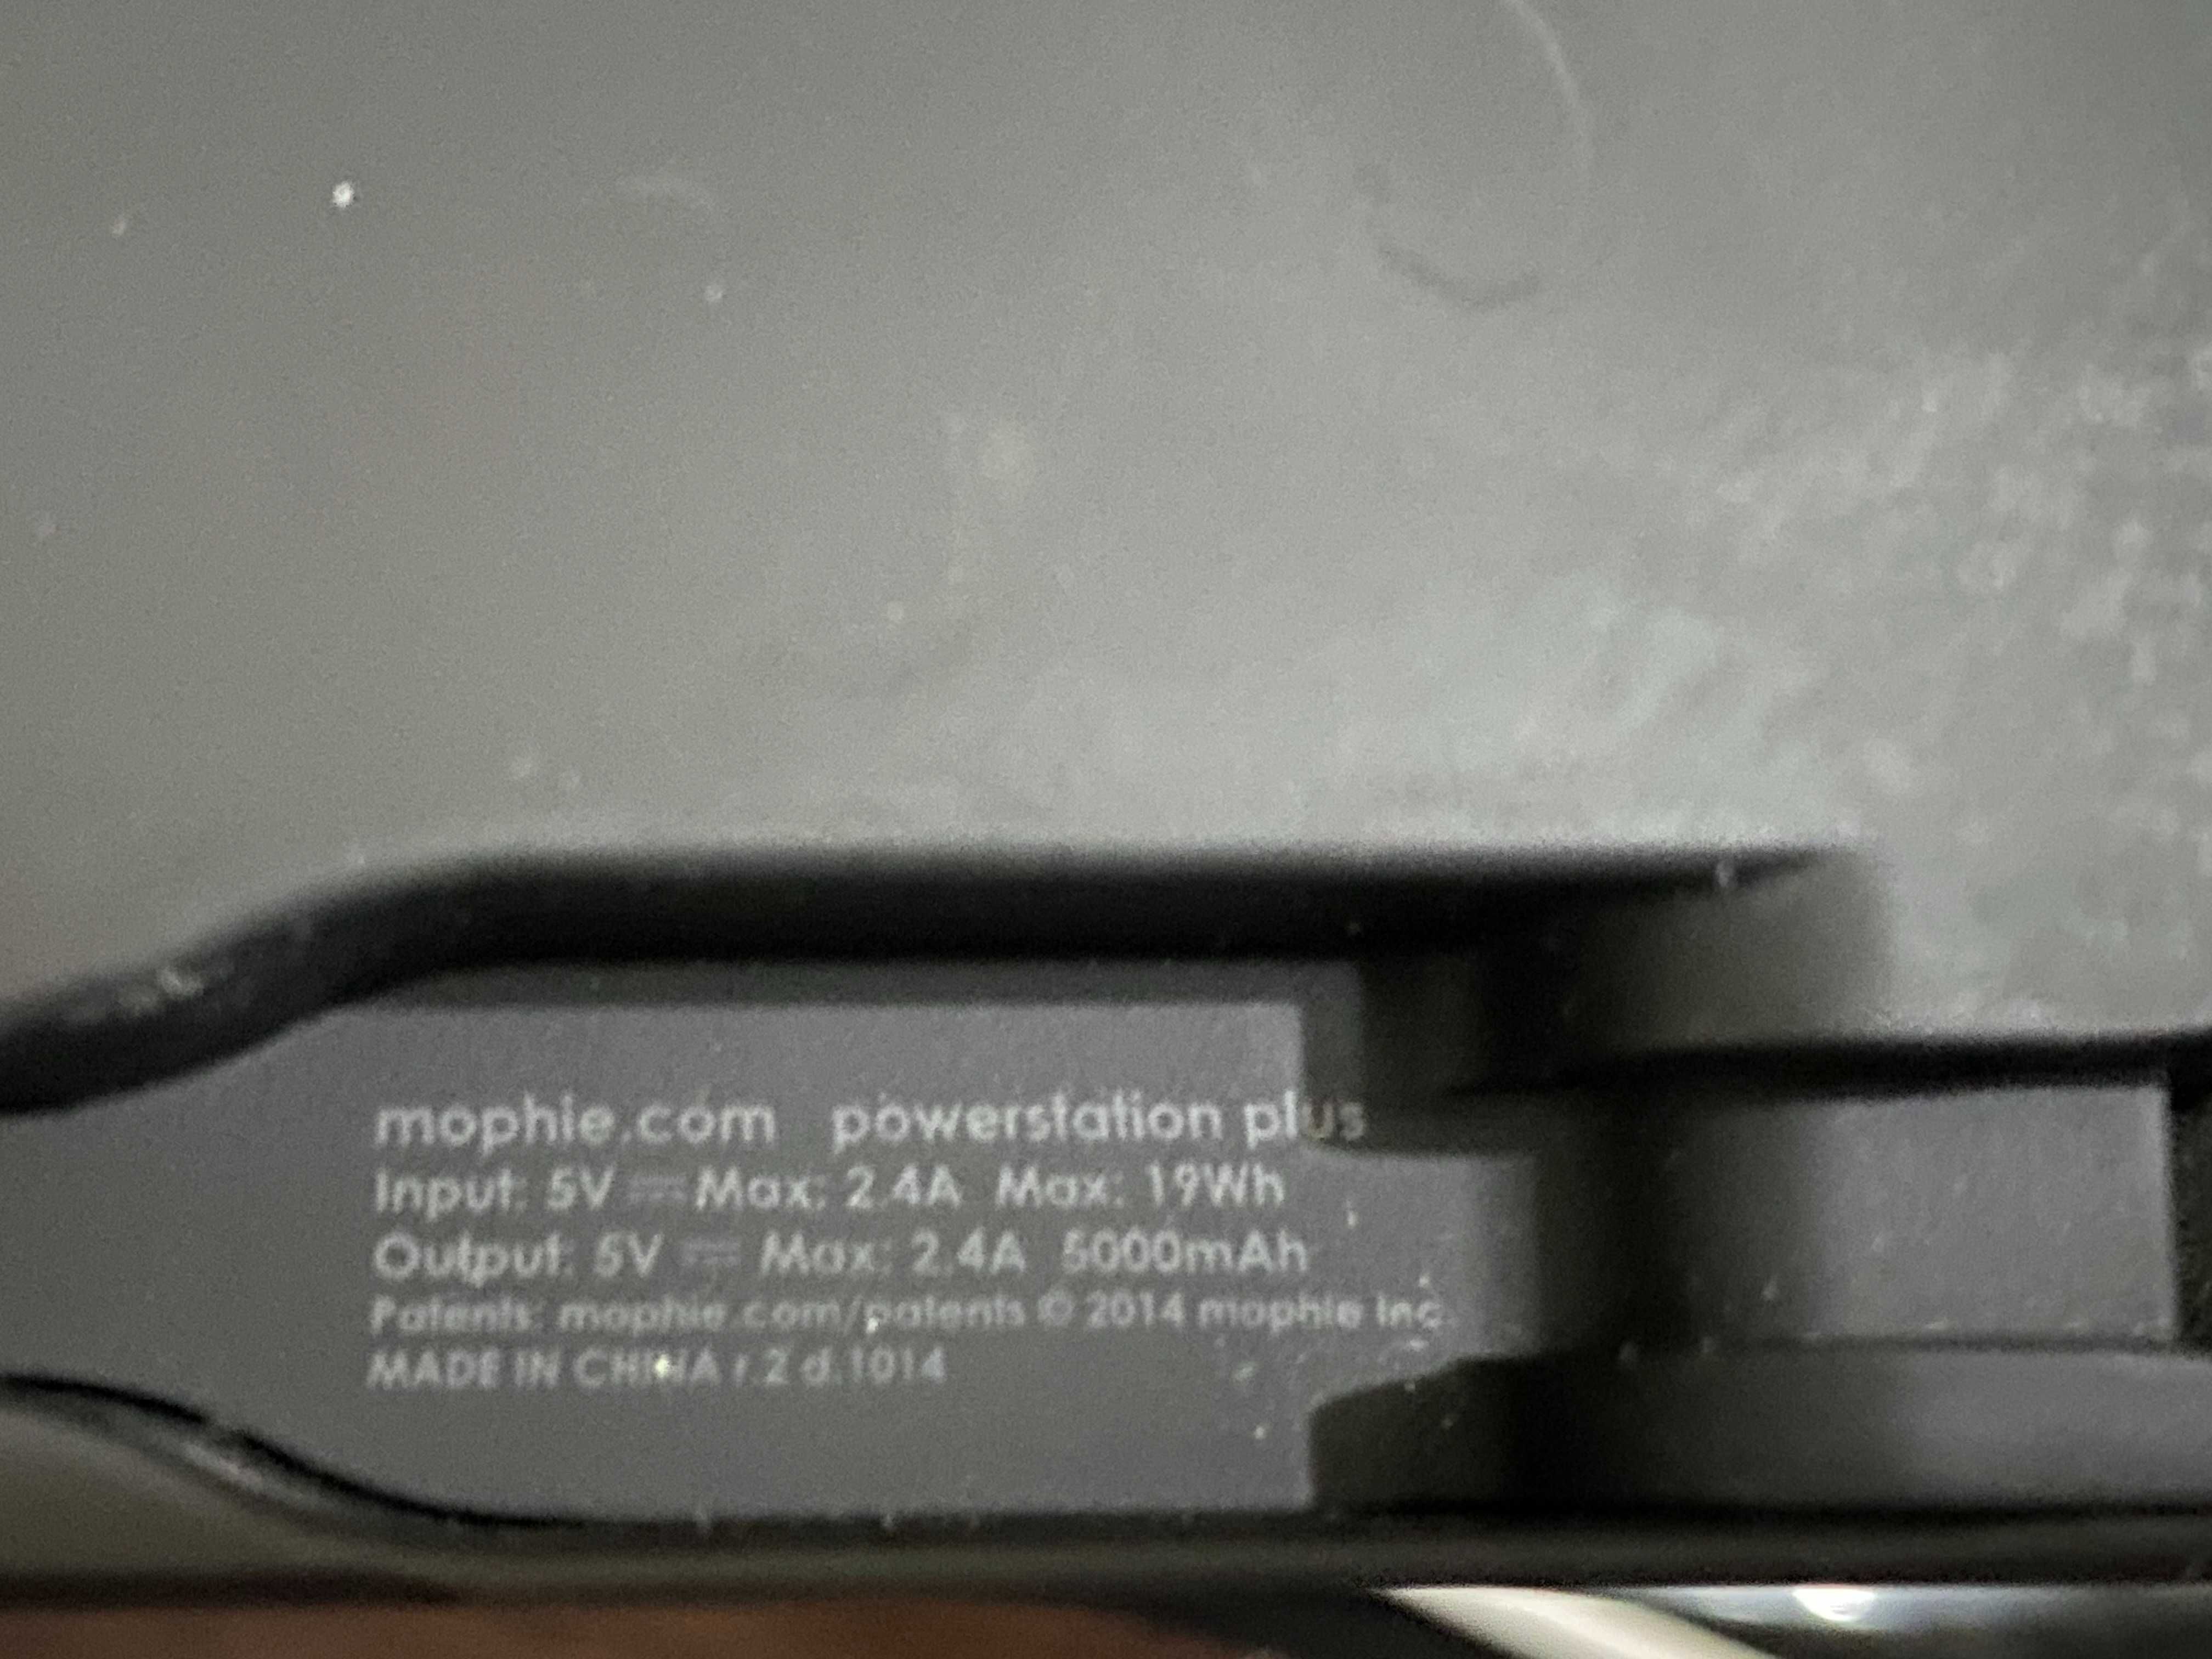 Power Bank (павербанк) Mophie powerstation Micro USB 5000mAh